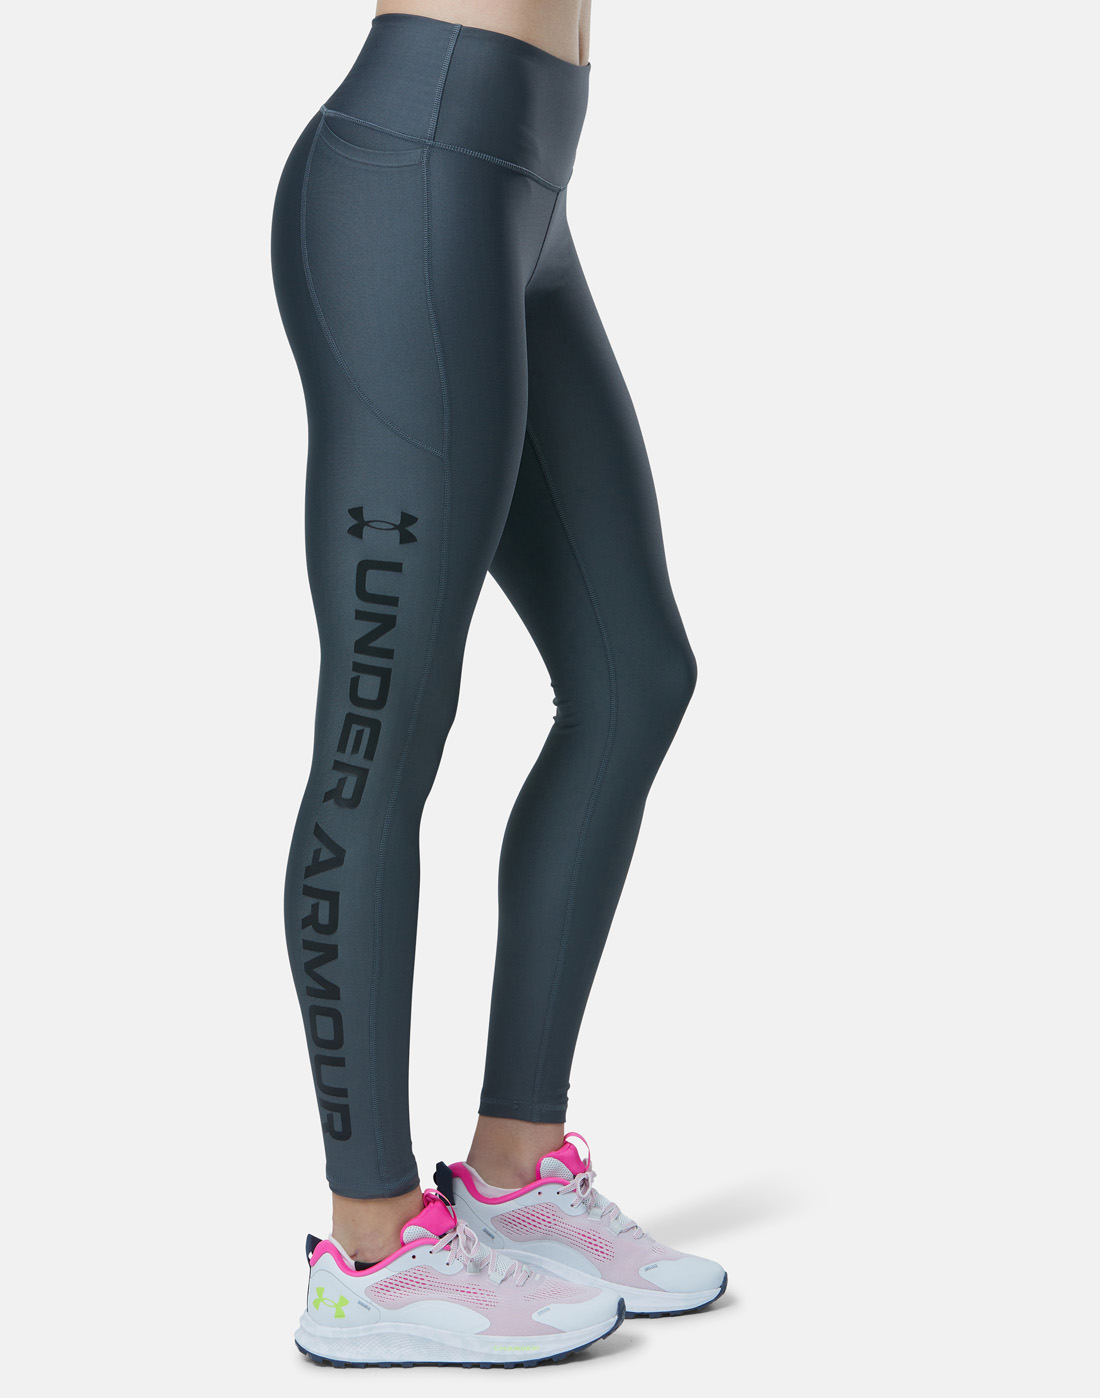 Women's compression leggings UNDER ARMOUR Armour Branded  Legging-BLK-1376327-001